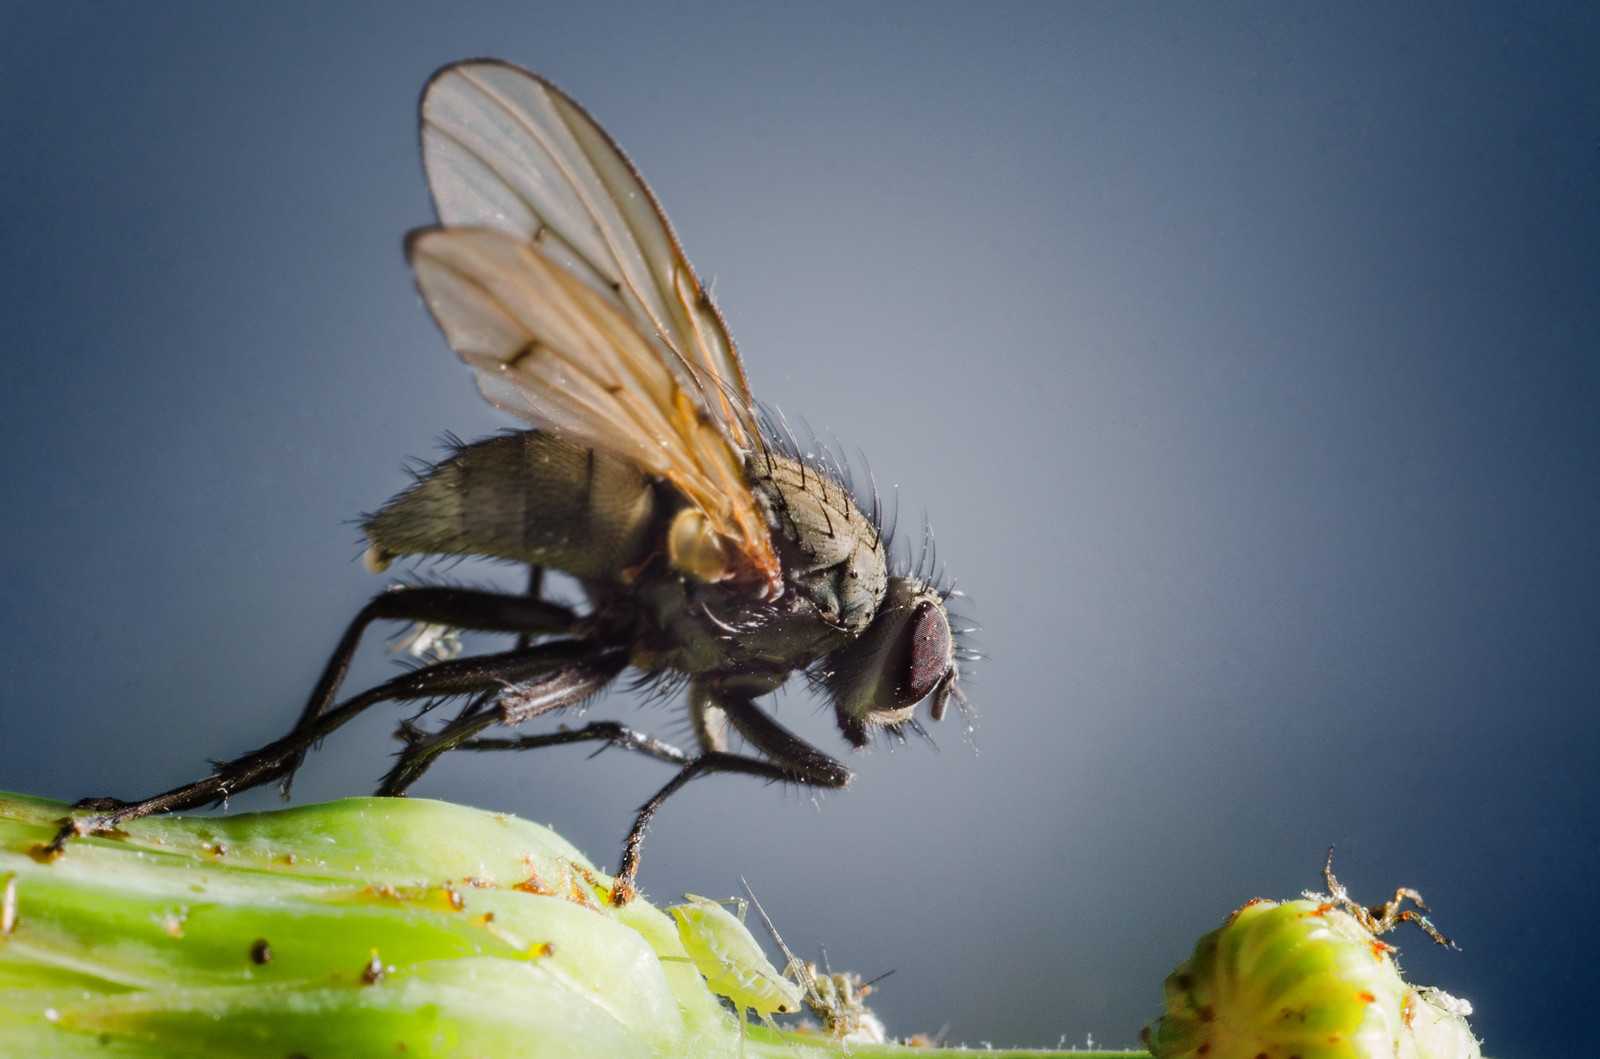 Housefly Anatomy